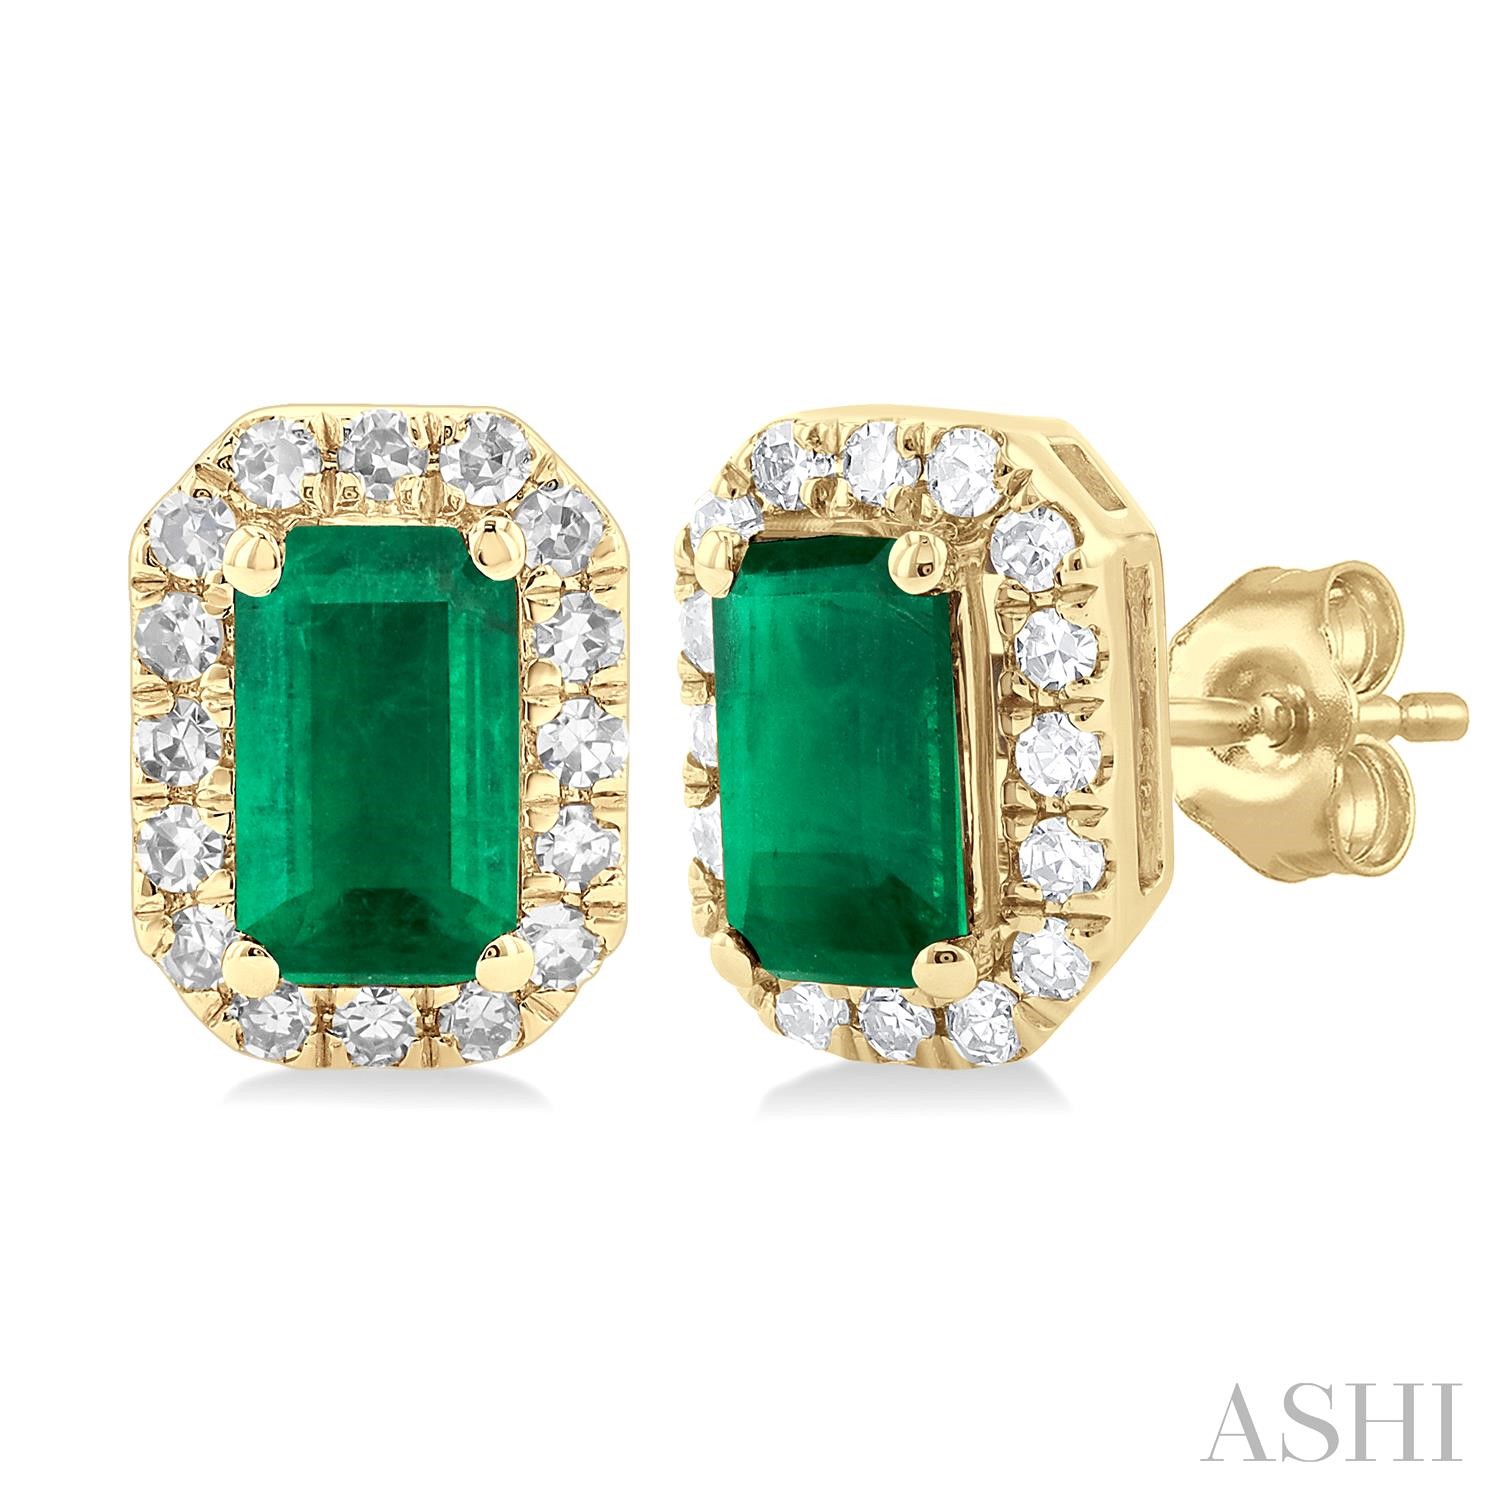 Emerald Shape Gemstone & Halo Diamond Earrings
1/8 ctw Single Cut Diamond and 5X3MM Octagonal Shape Emerald Halo Precious Stud Earrings in 10K Yellow Gold